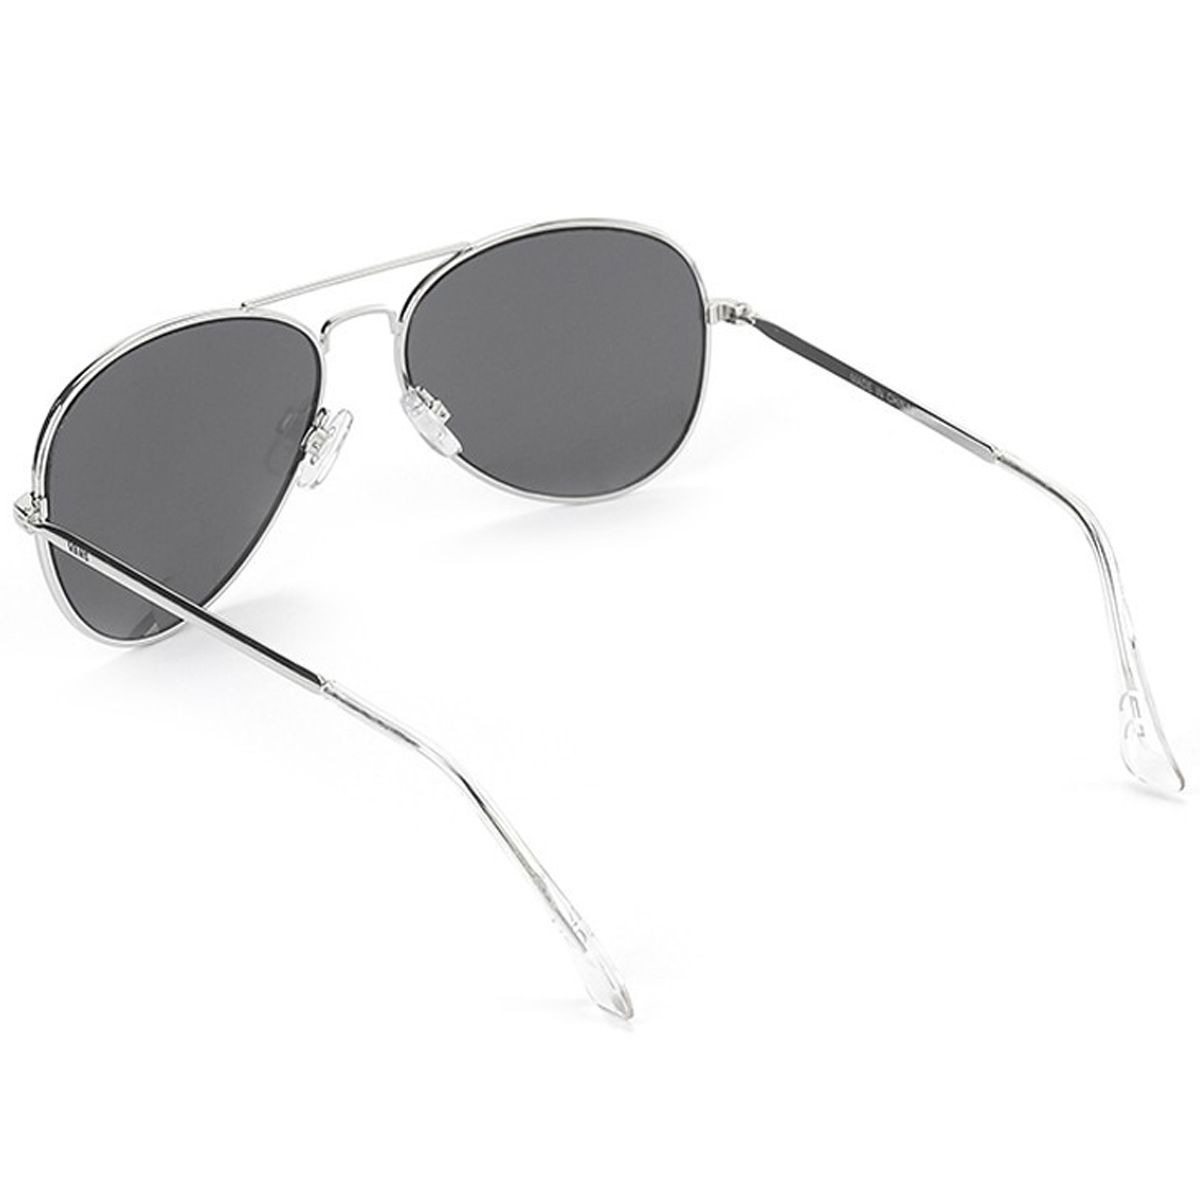 Sunglasses II Henderson - Vans Silver Shades